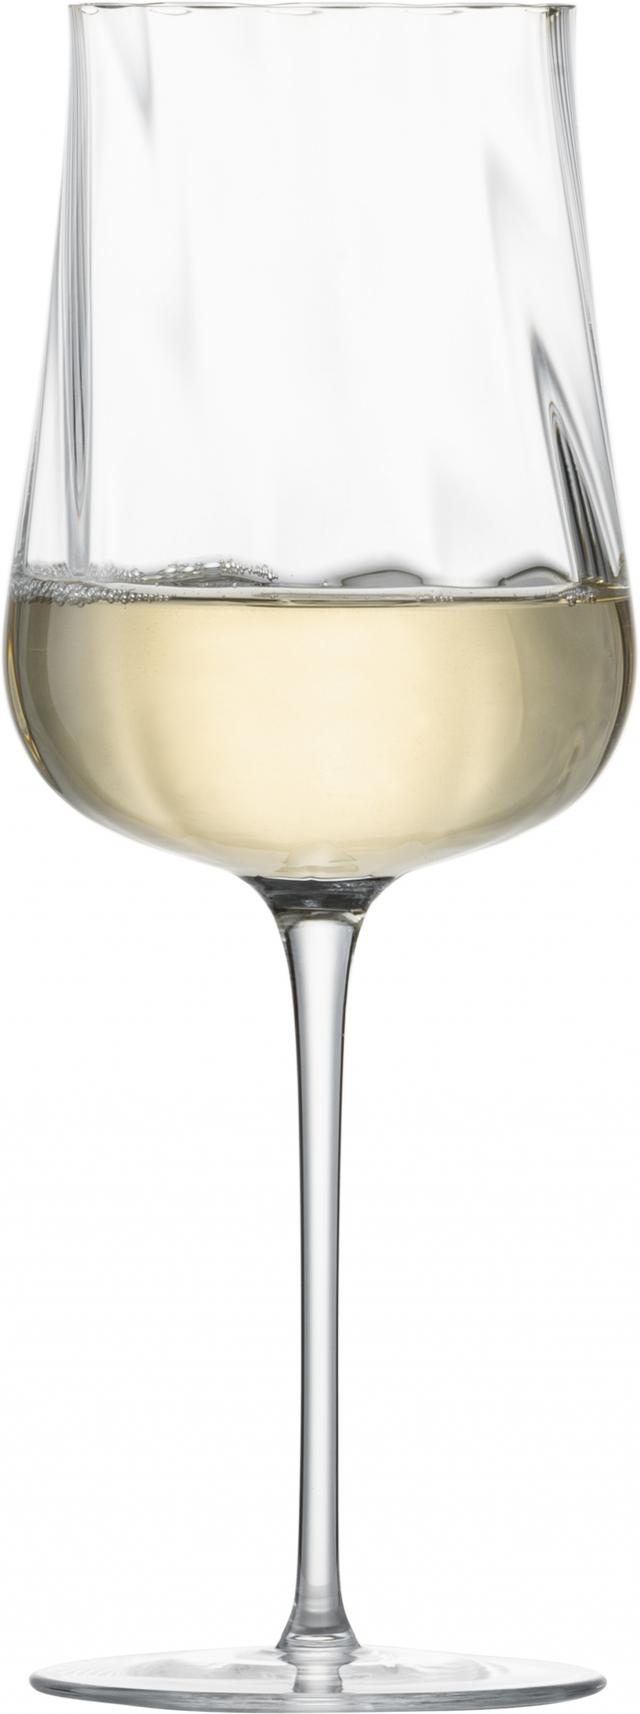 zwiesel glas marlène witte wijnglas 0 - 0.327ltr - geschenkverpakking 2 glazen